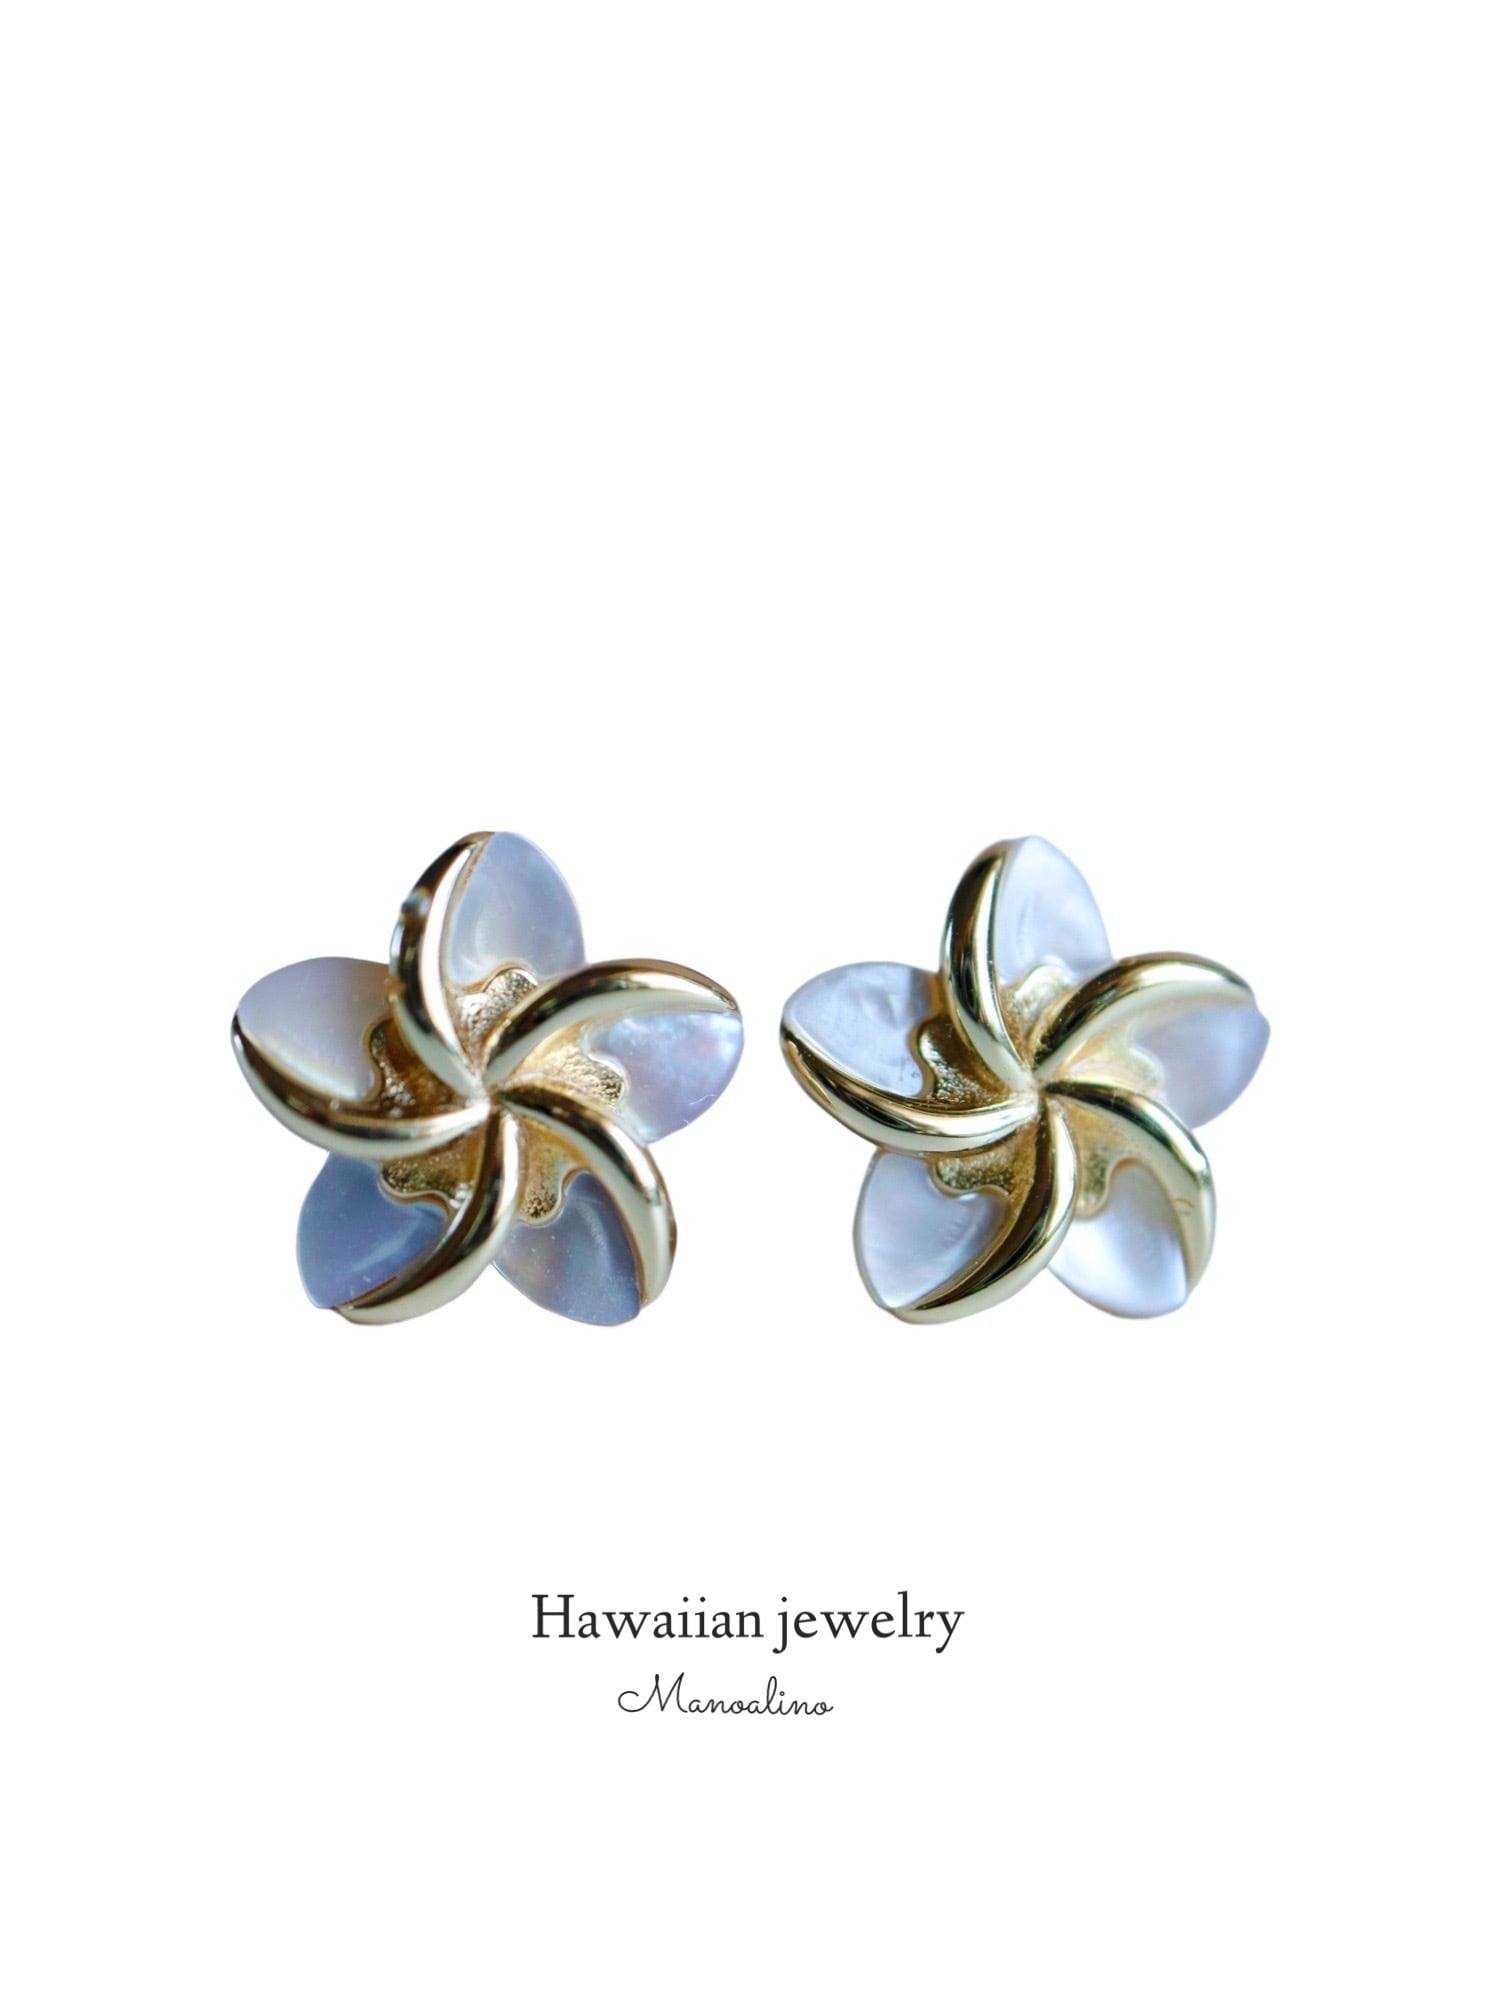 pierce earring(ピアス、イヤリング) | Manoalino 【Hawaiianjewelry